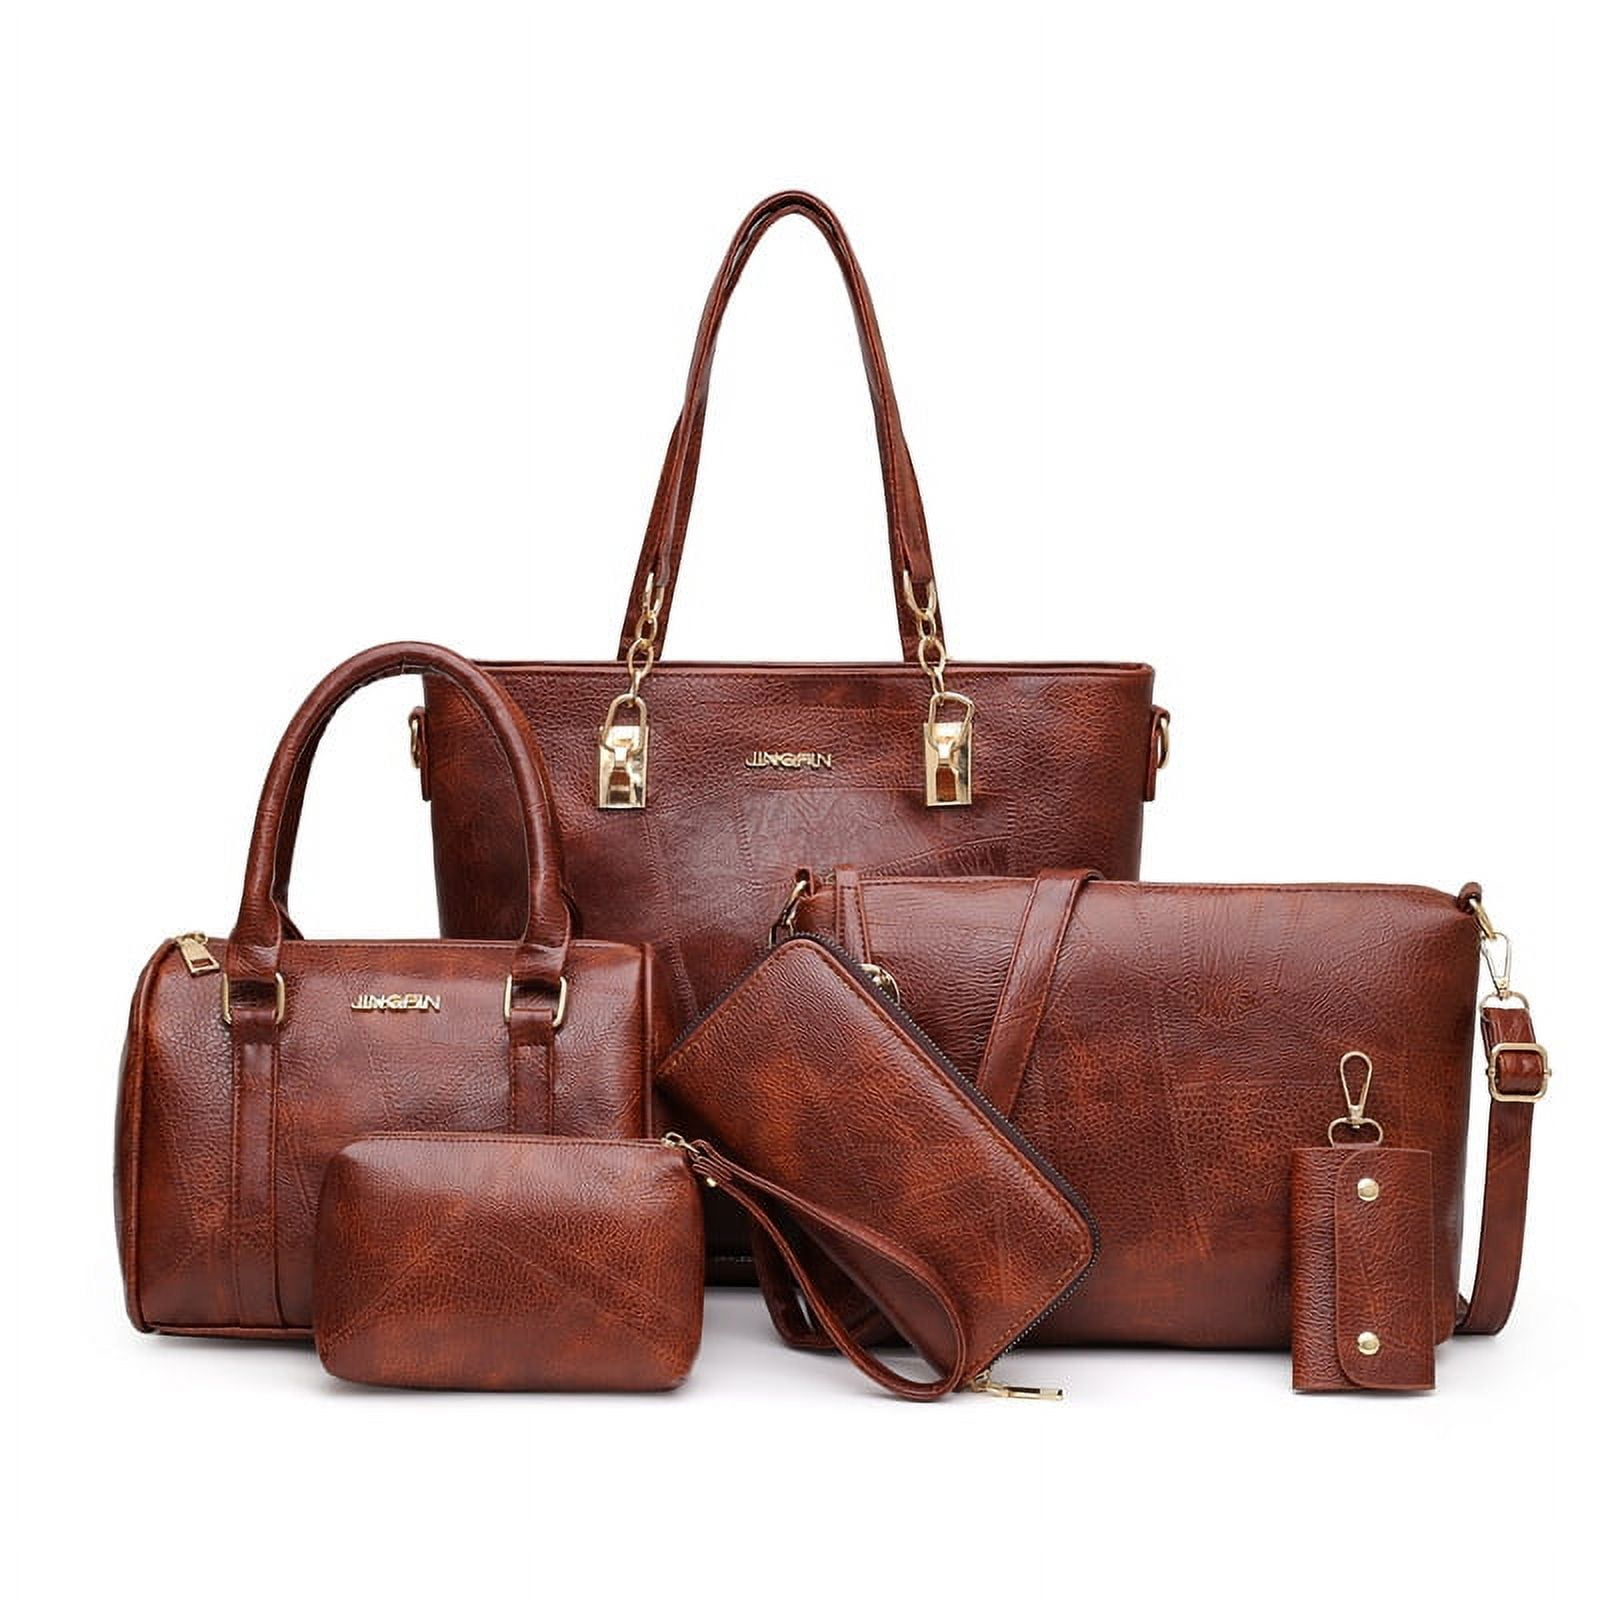 Handbags for Women Shoulder Bags Sets PU Leather Large Tote Bag Crossbody Clutch Purse 4 5 Pcs Handle Bag for Work Office A4 1c8b4a8f 975f 4d75 96f3 52bfd59f0481.145caa9d9e616467db75f5cd8c8da233